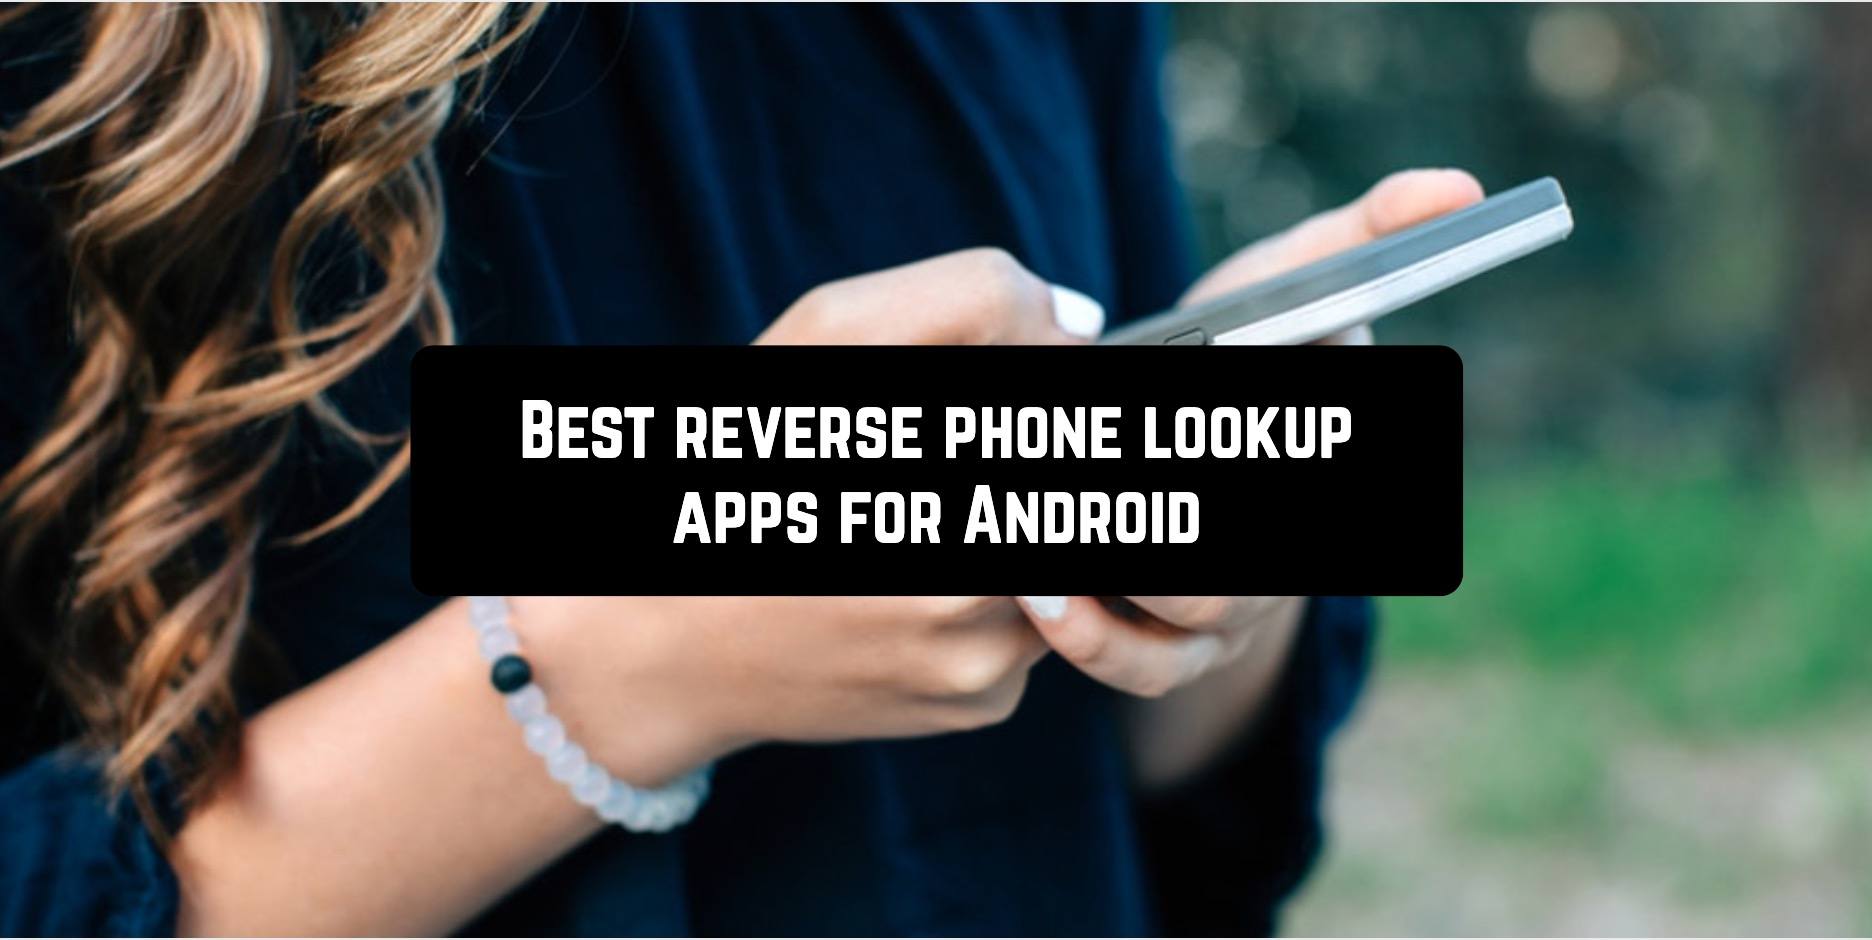 Best reverse phone lookup apps